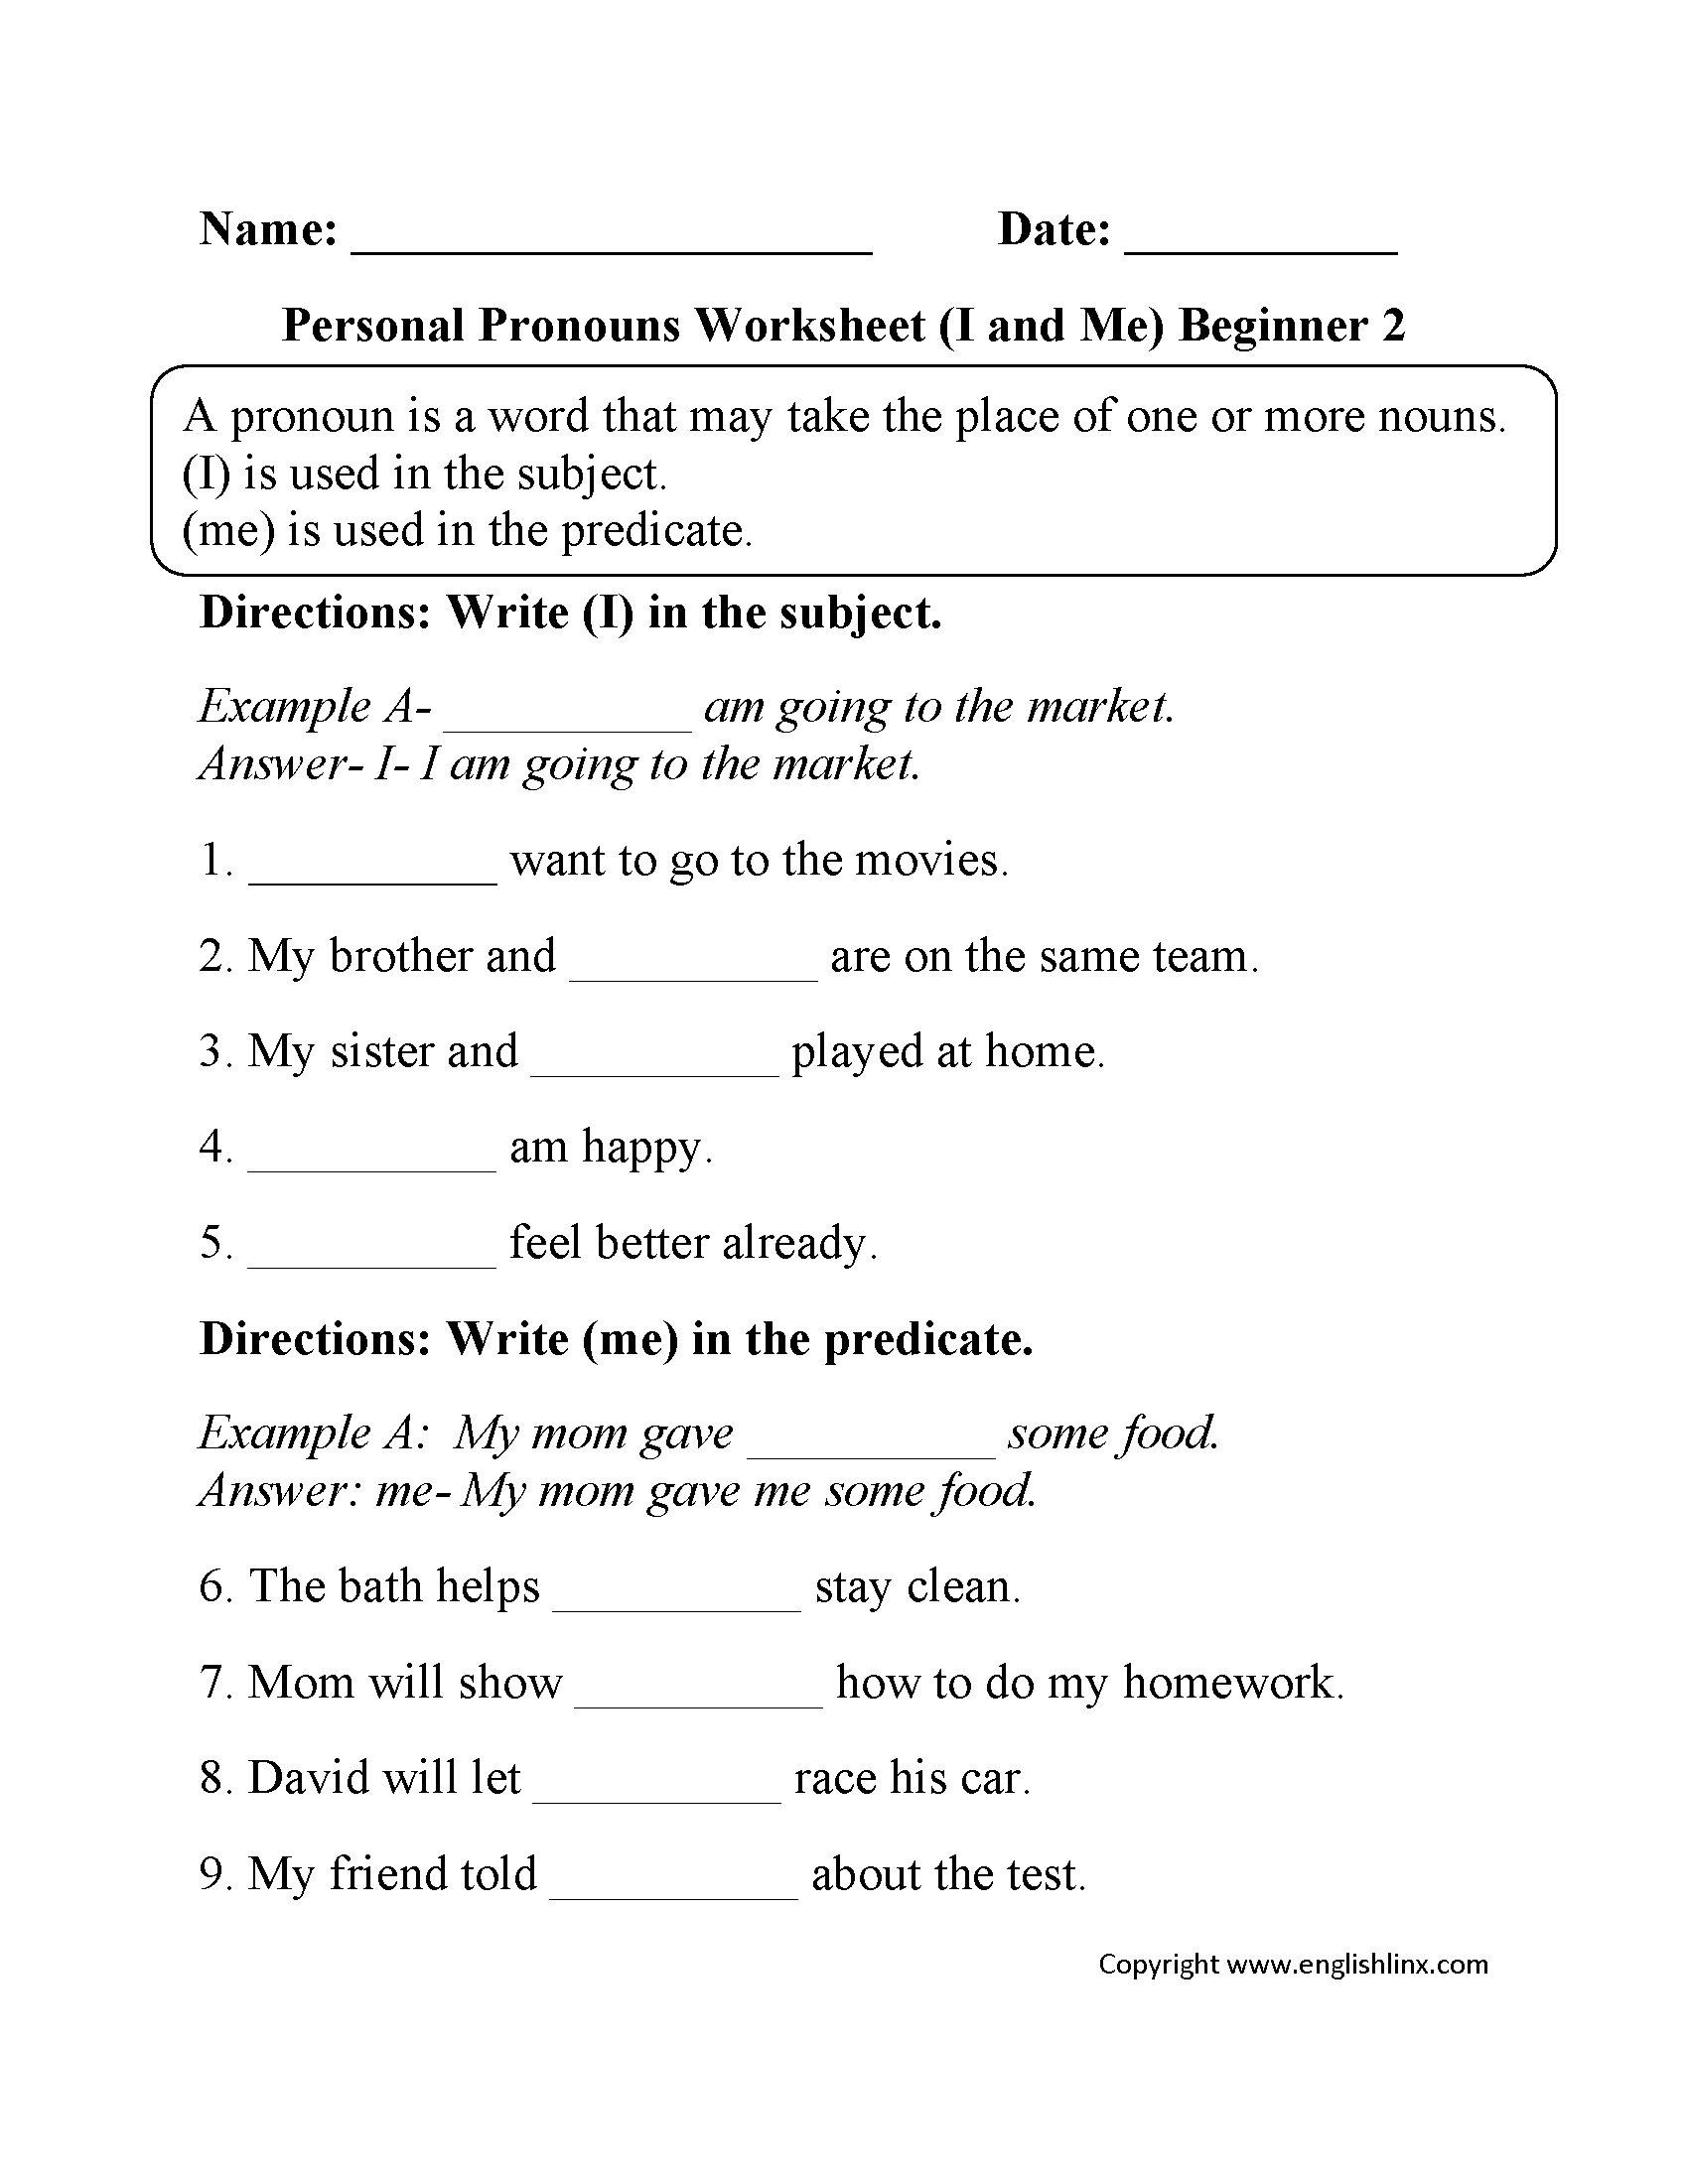 pronouns-worksheets-pronoun-worksheets-parts-of-speech-worksheets-pronoun-activities